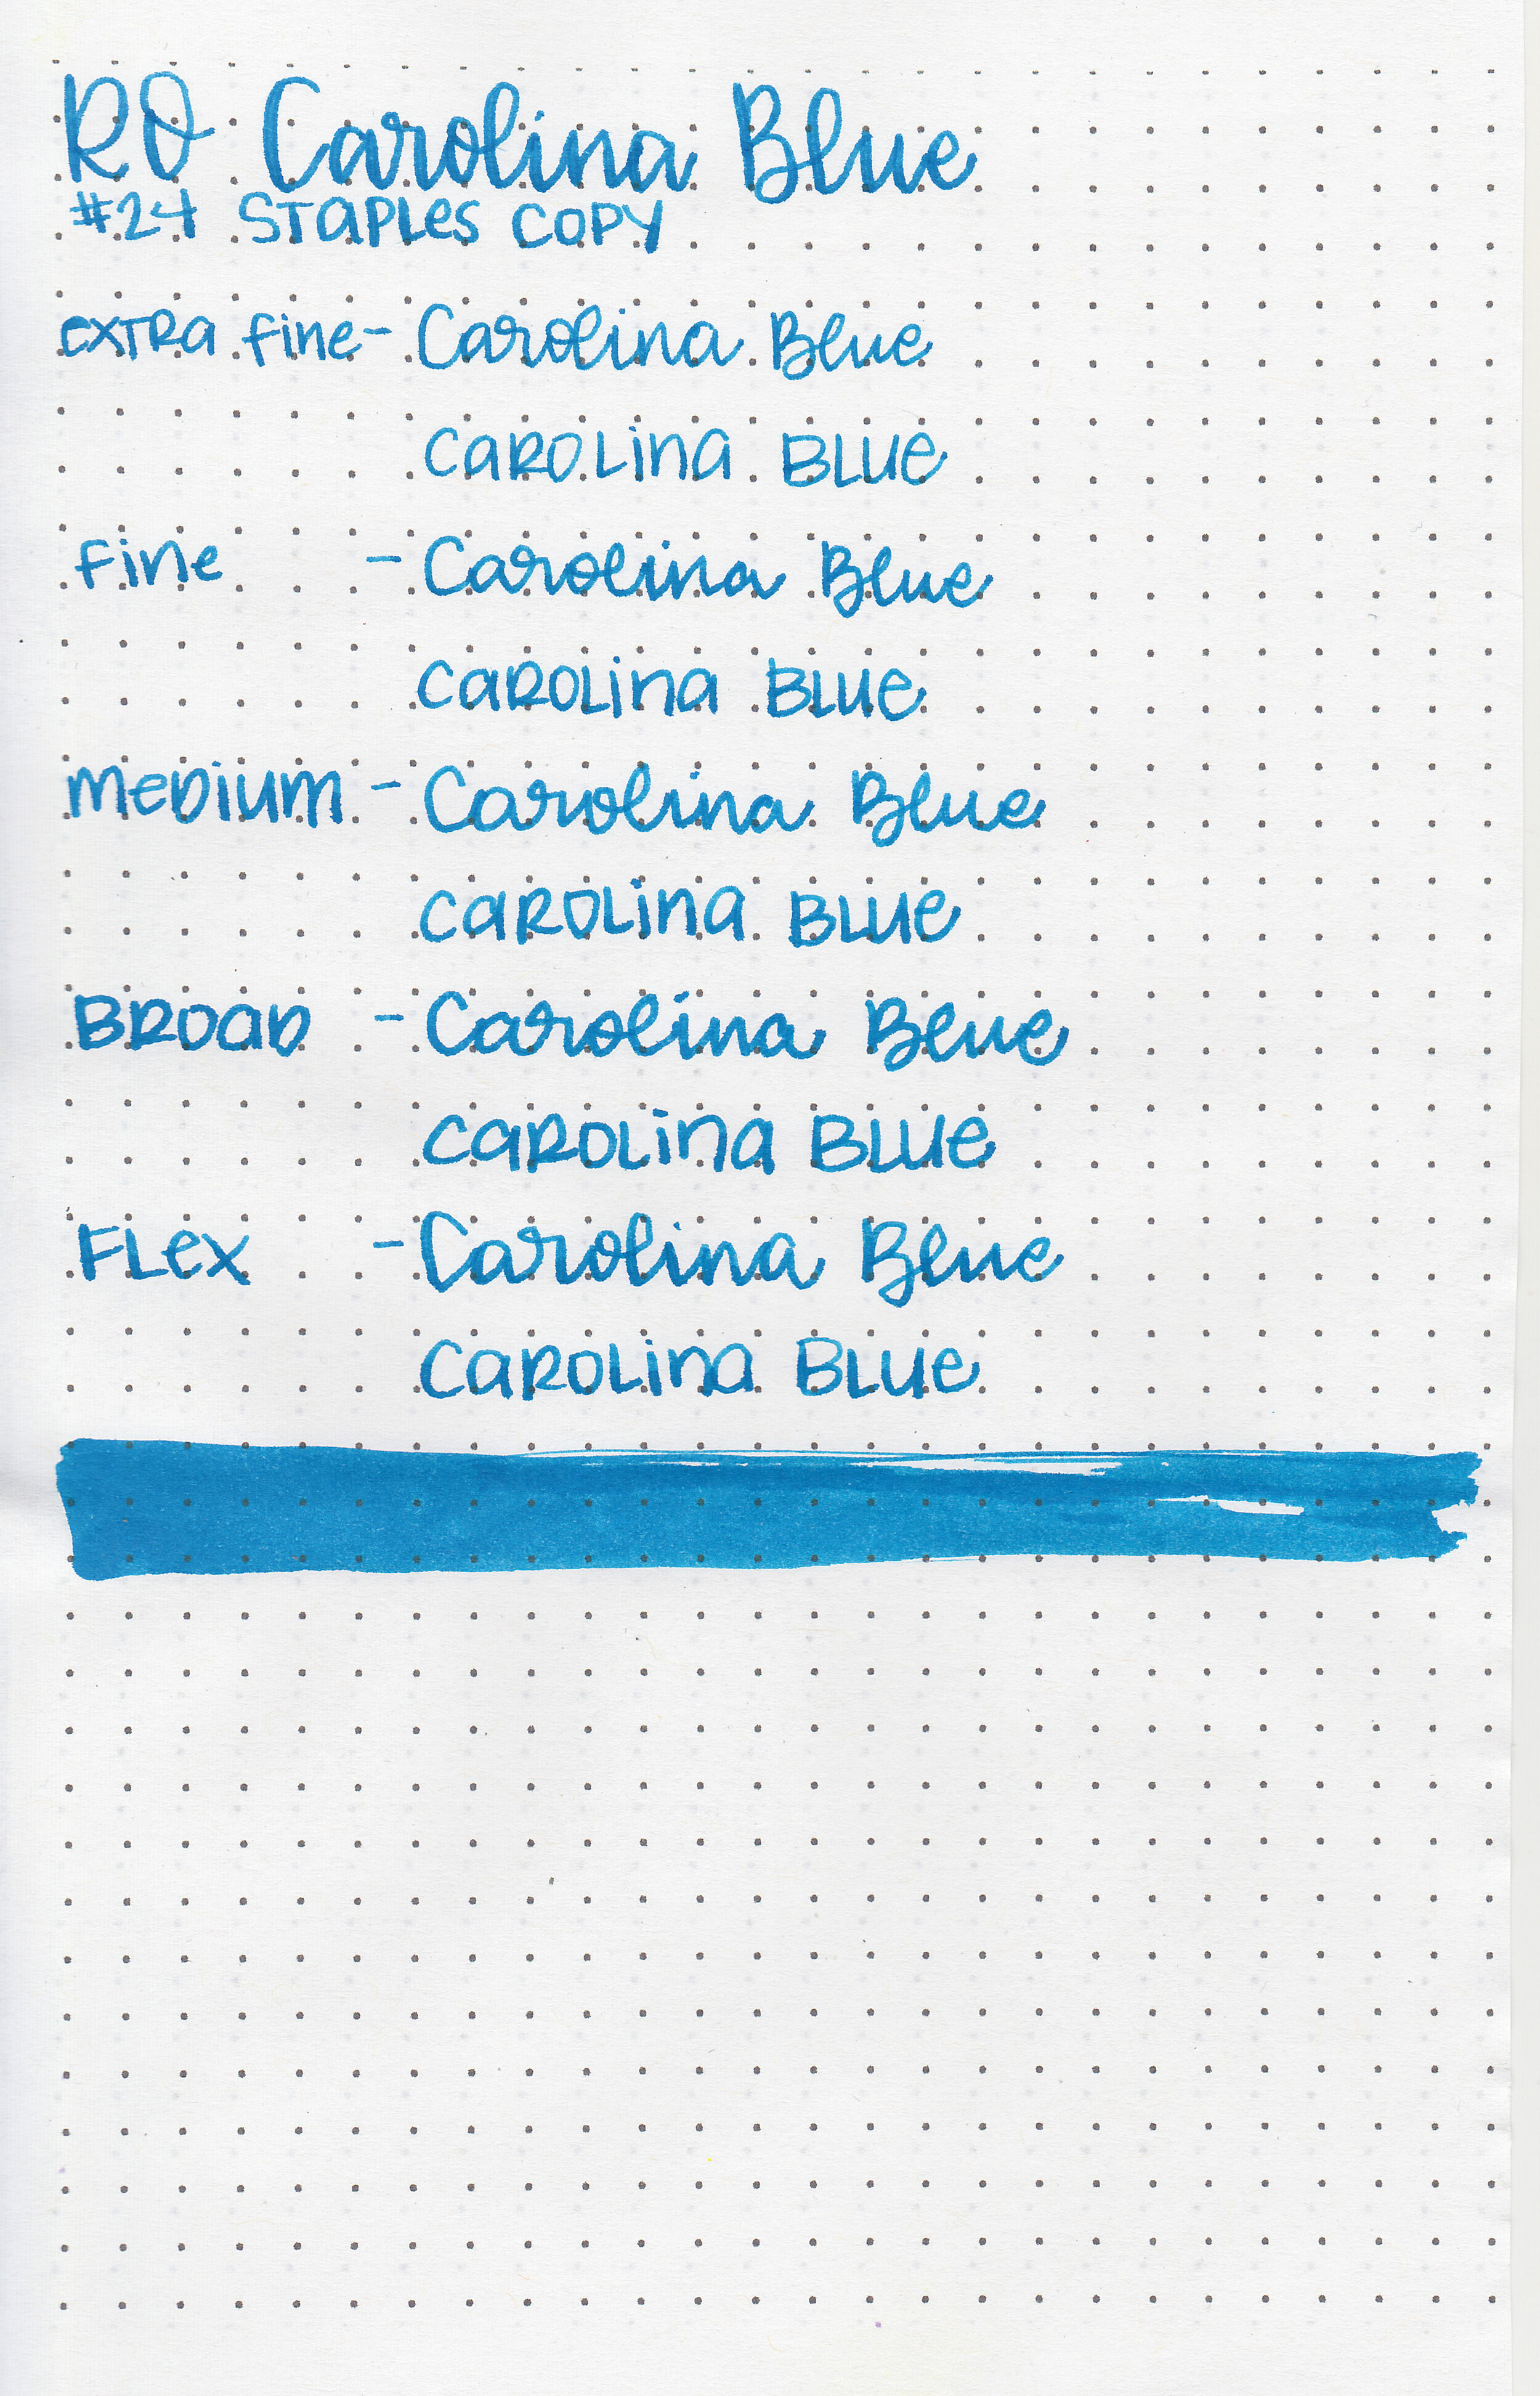 ro-carolina-blue-11.jpg